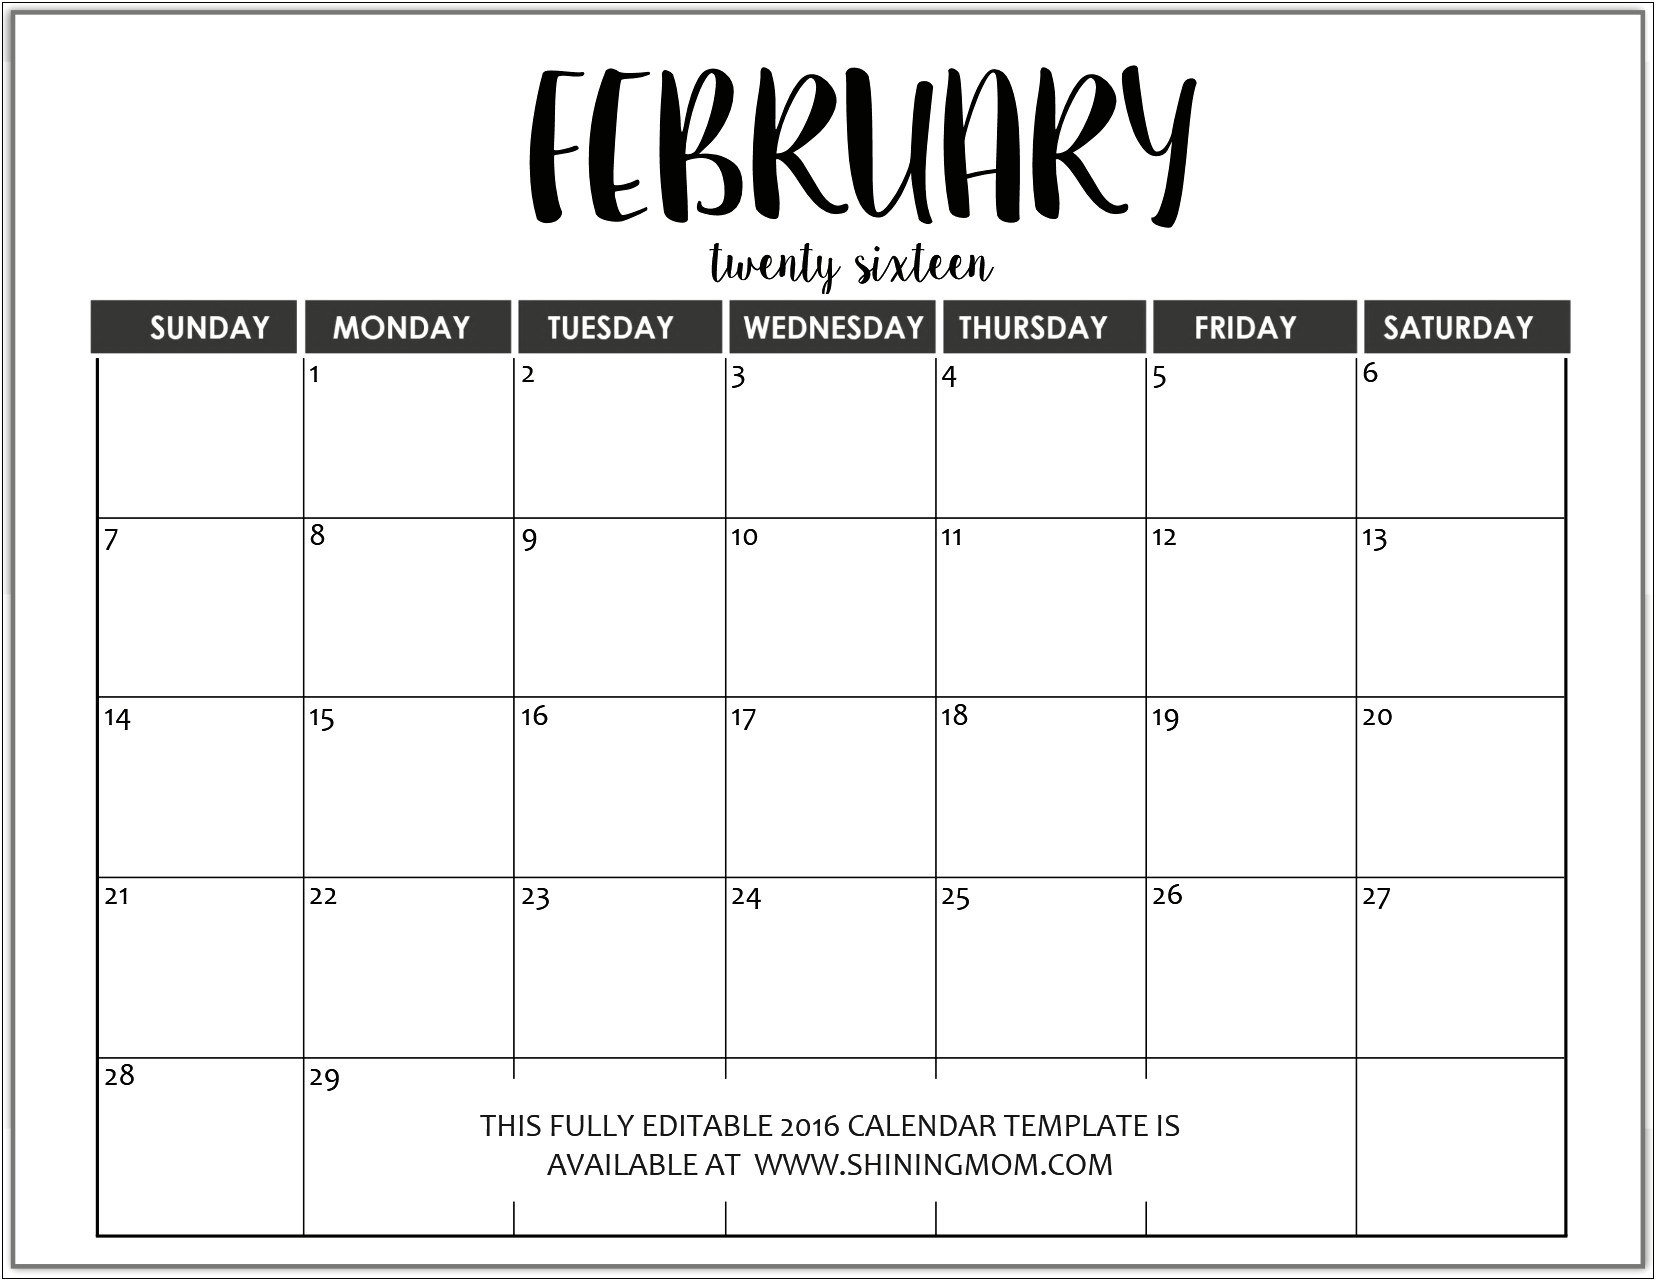 Microsoft Word Calendar Template February 2018